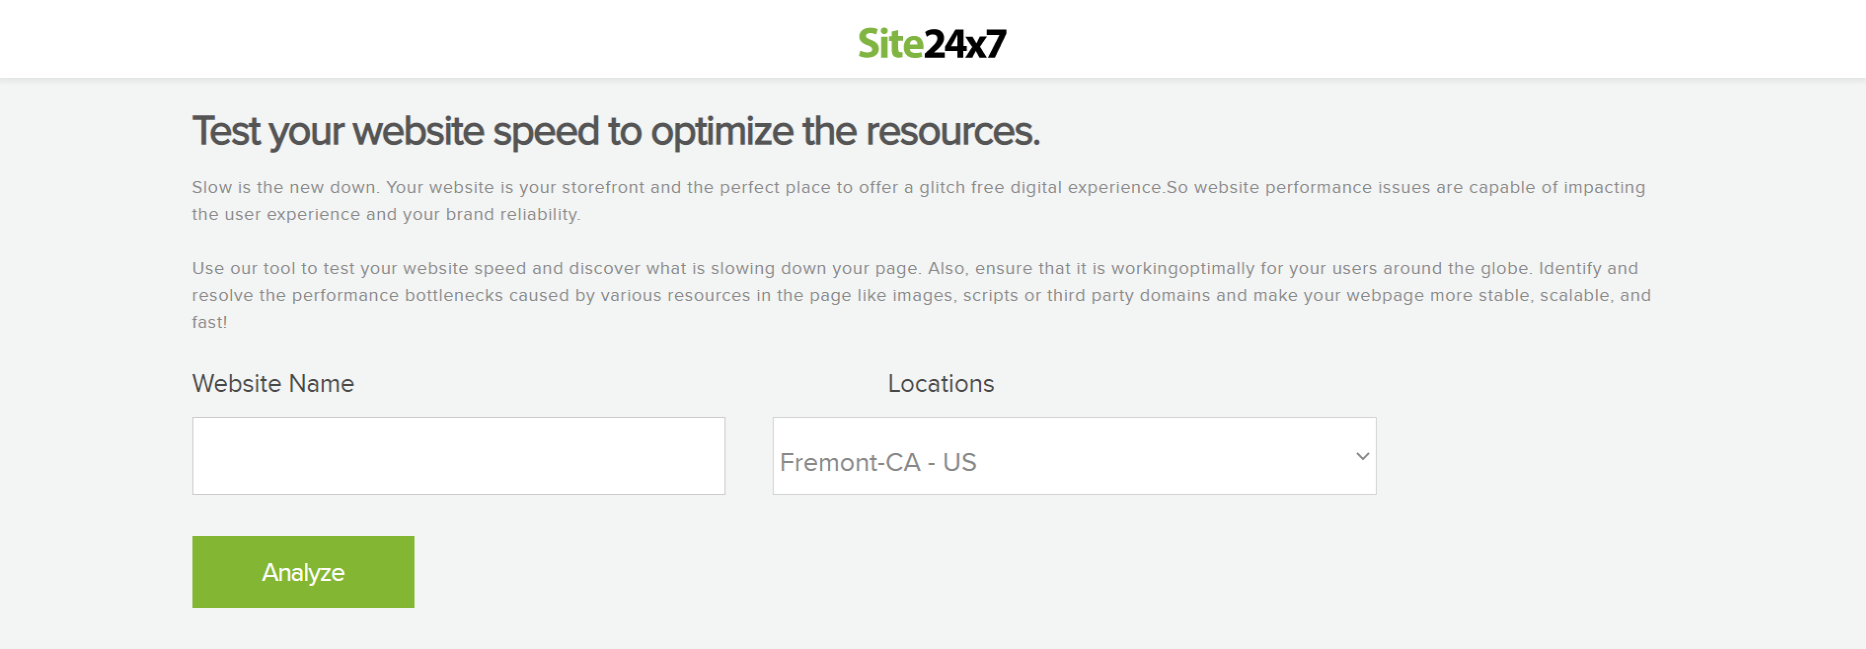 Site24x7-Best Website Page Speed Test Tools-Mobile Site-Desktop Site